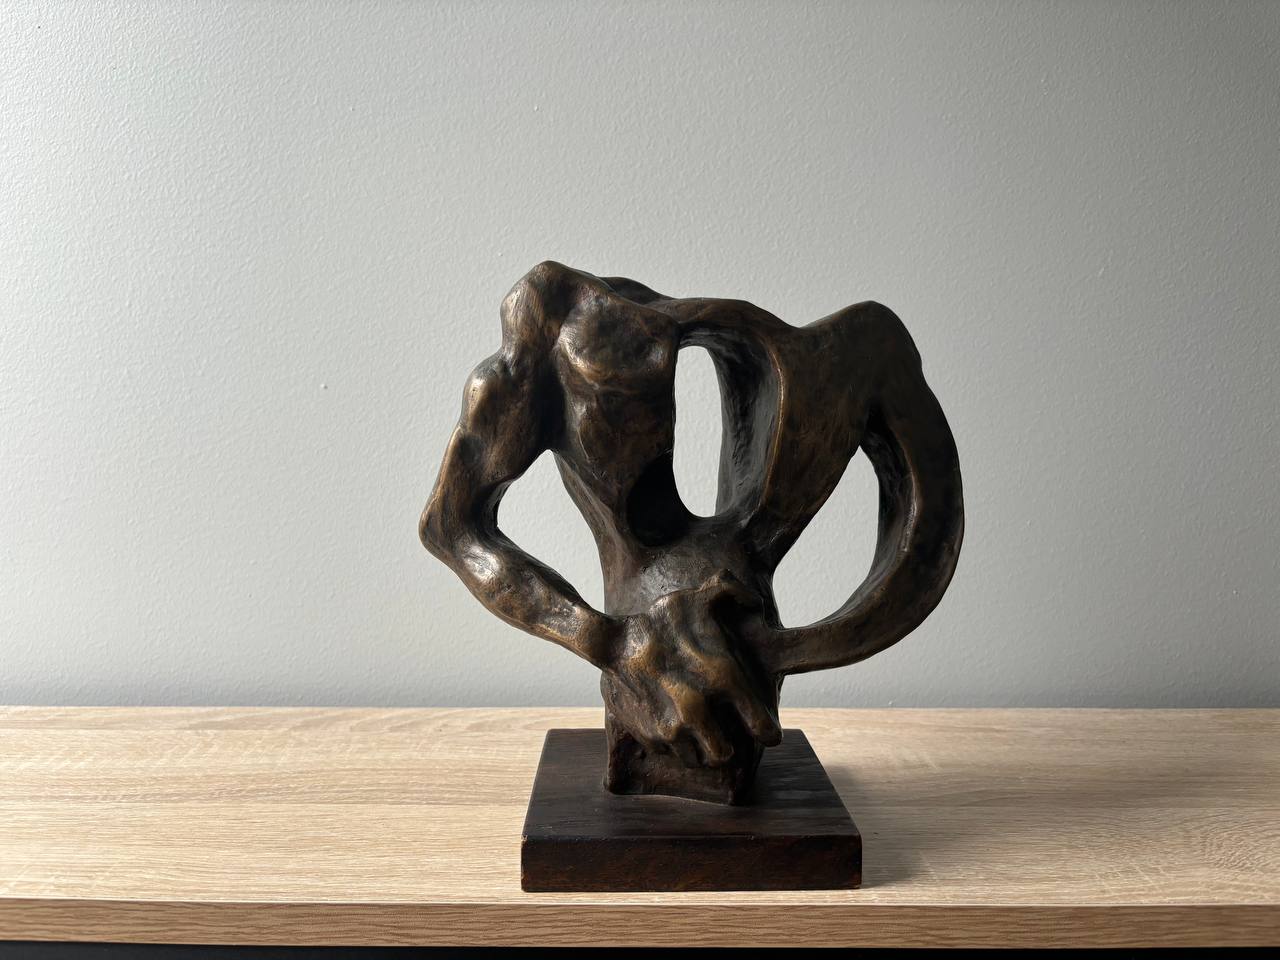 Ernst Neizvestny - Bronze sculpture "Torso" ("Clasped hands"), 1960s - Bronze, Ernst Neizvestny, Sculpture - Hedonism Gallery